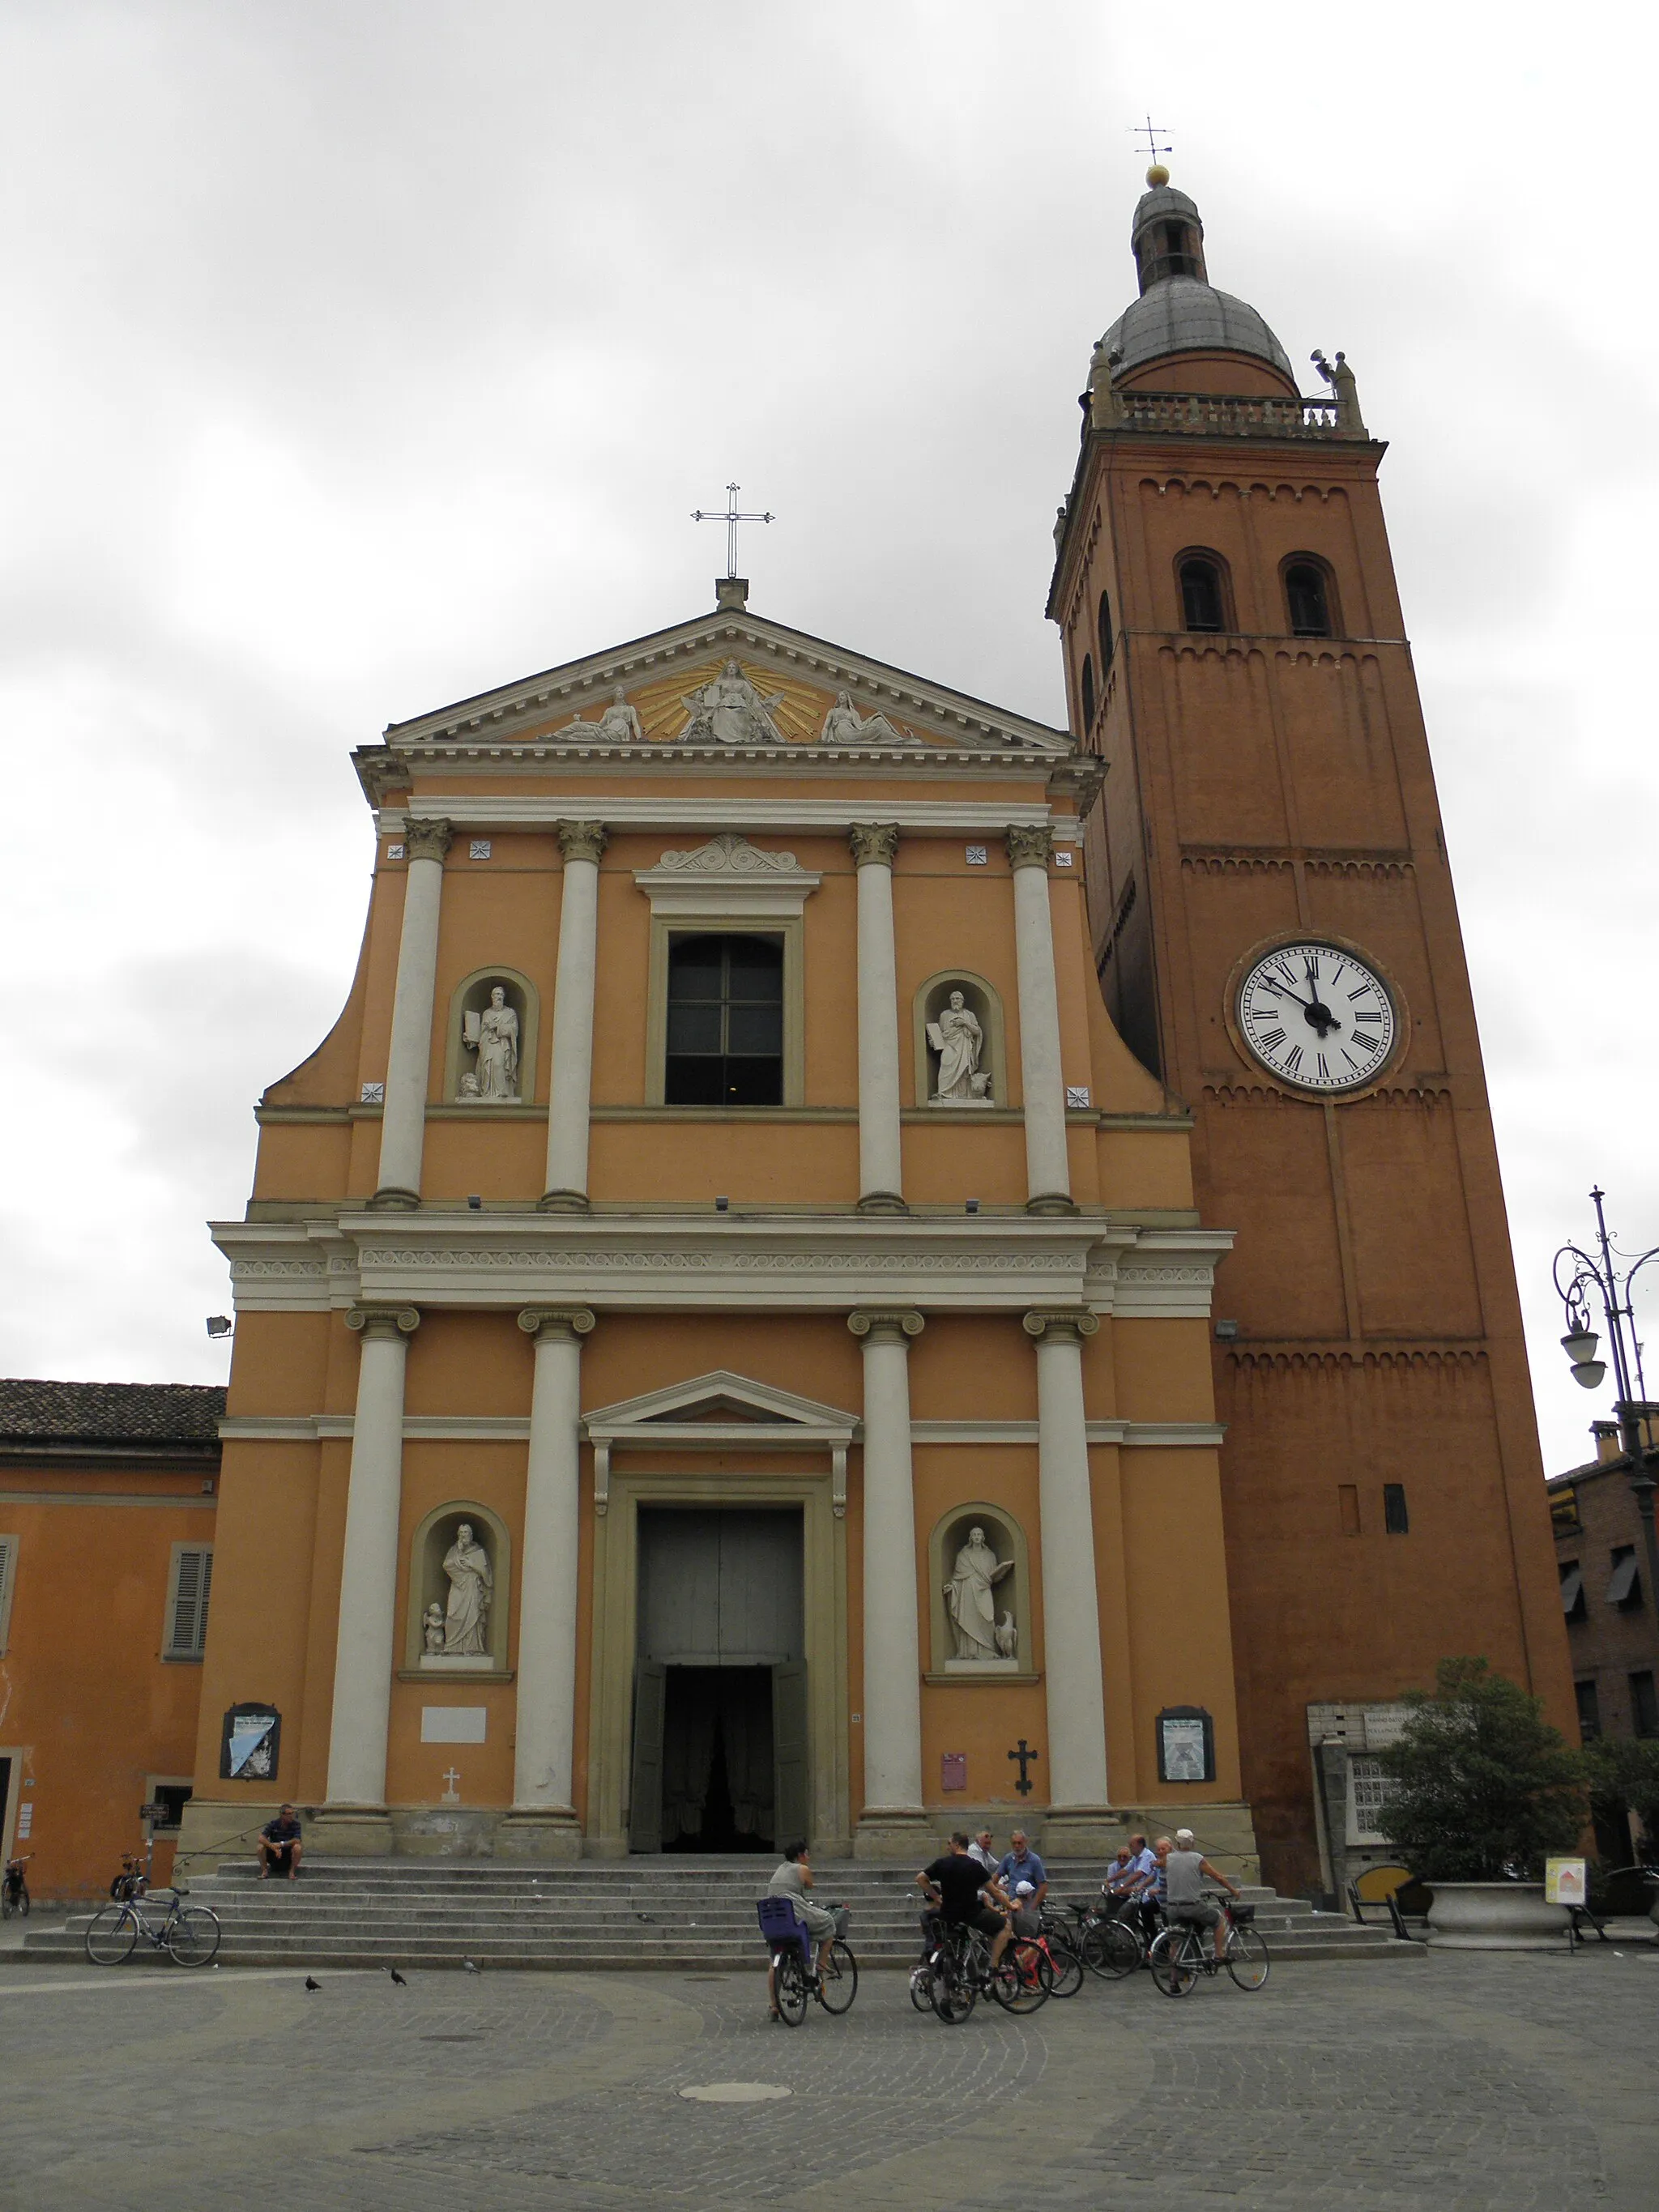 Image of San Giovanni in Persiceto